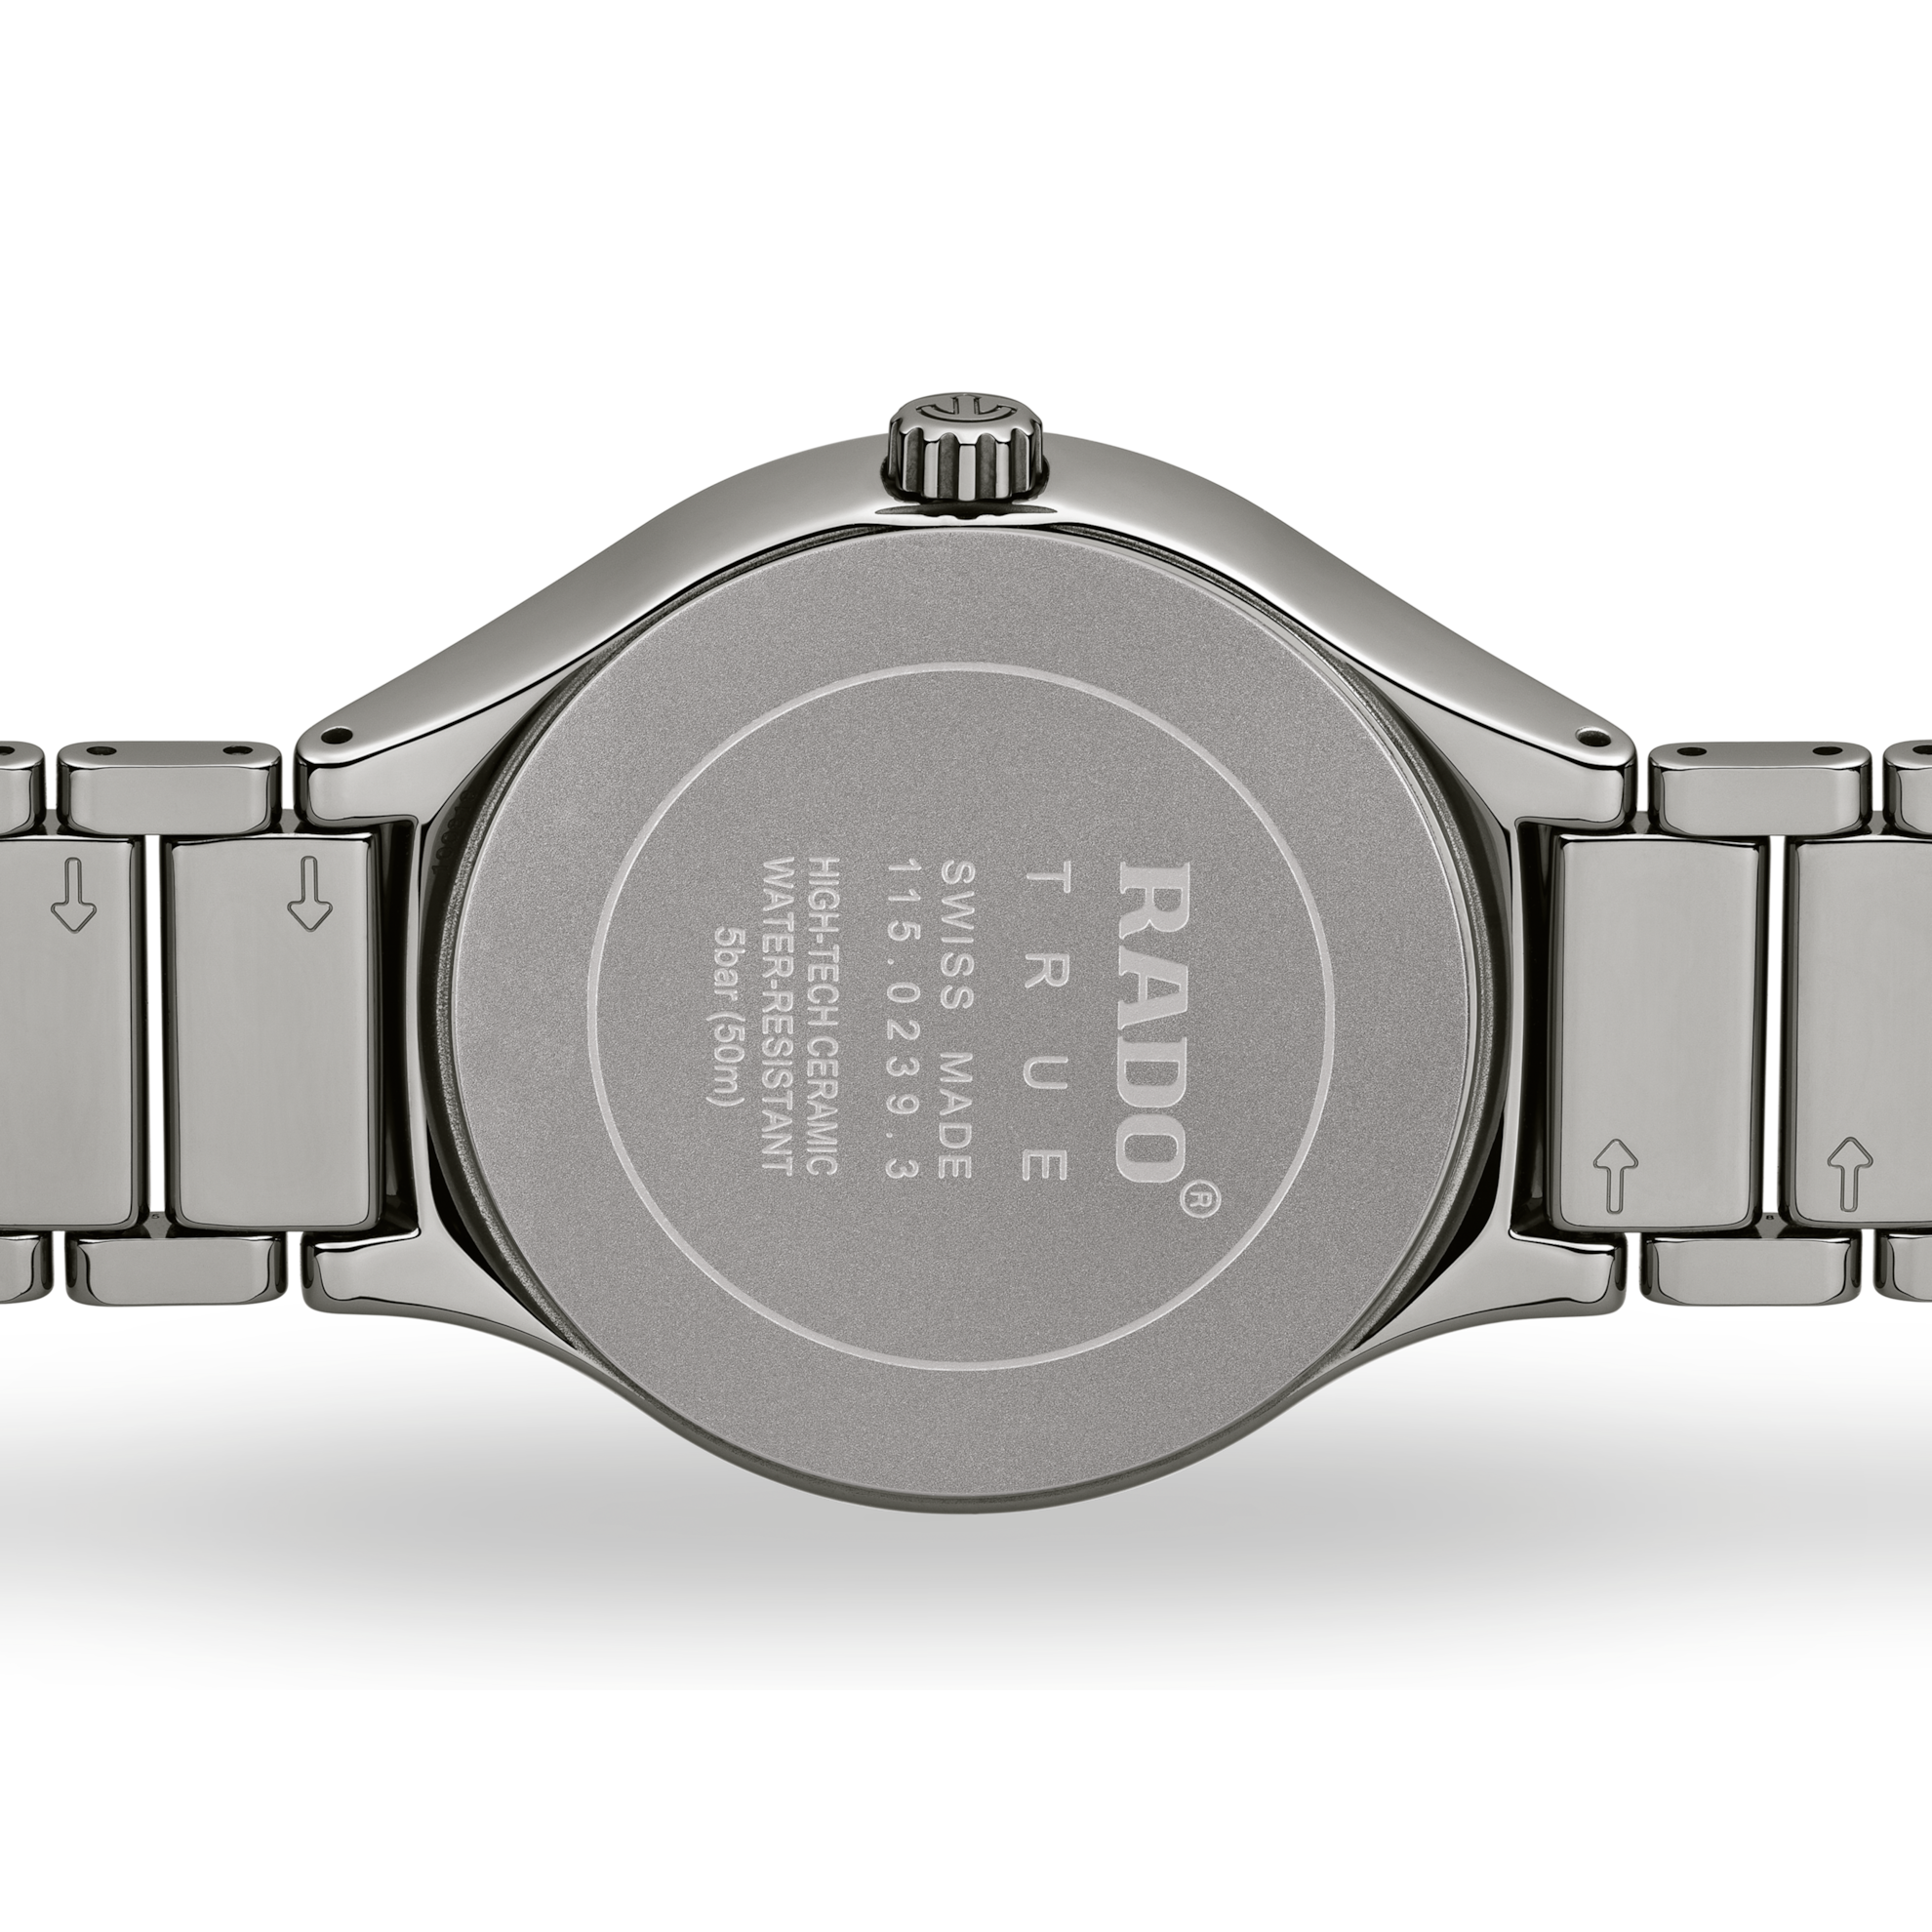 Christies - Patek Philippe 3843/1 unique diamond watch